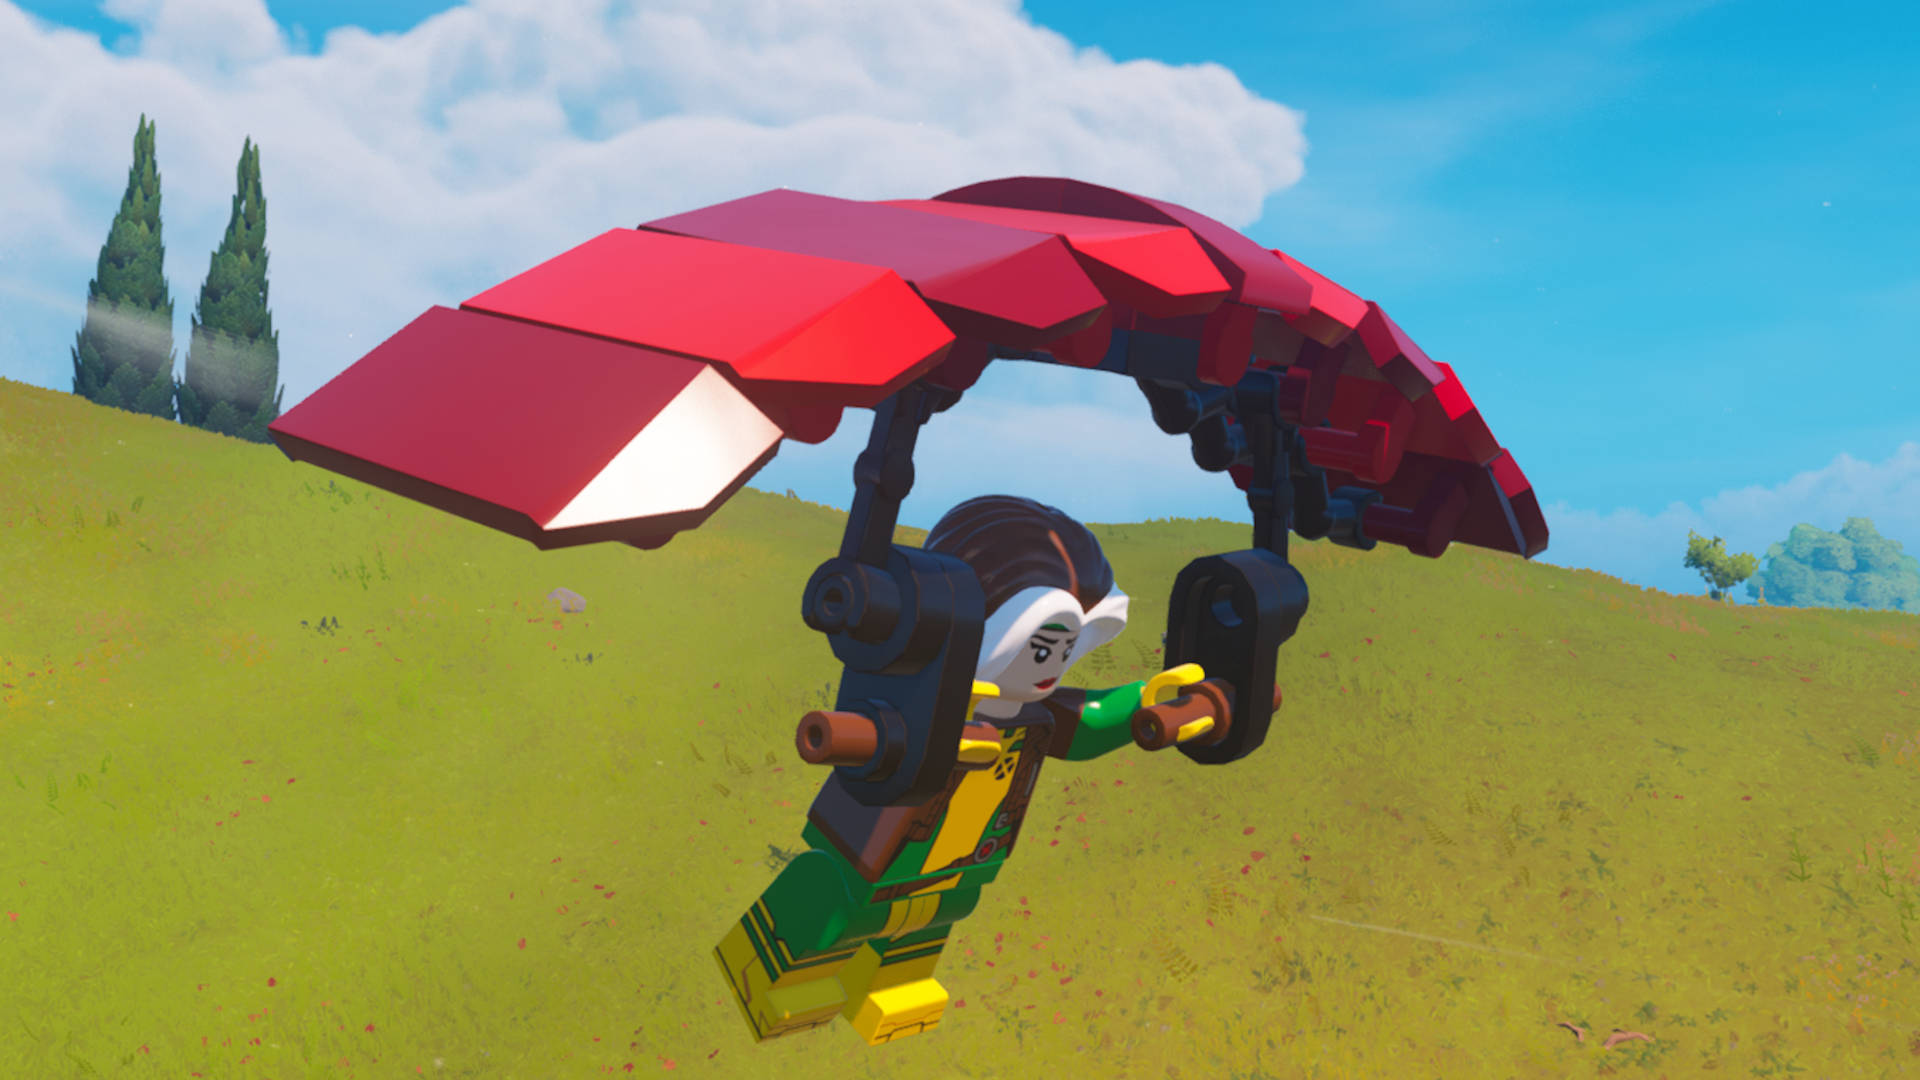 How to make a Lego Fortnite glider